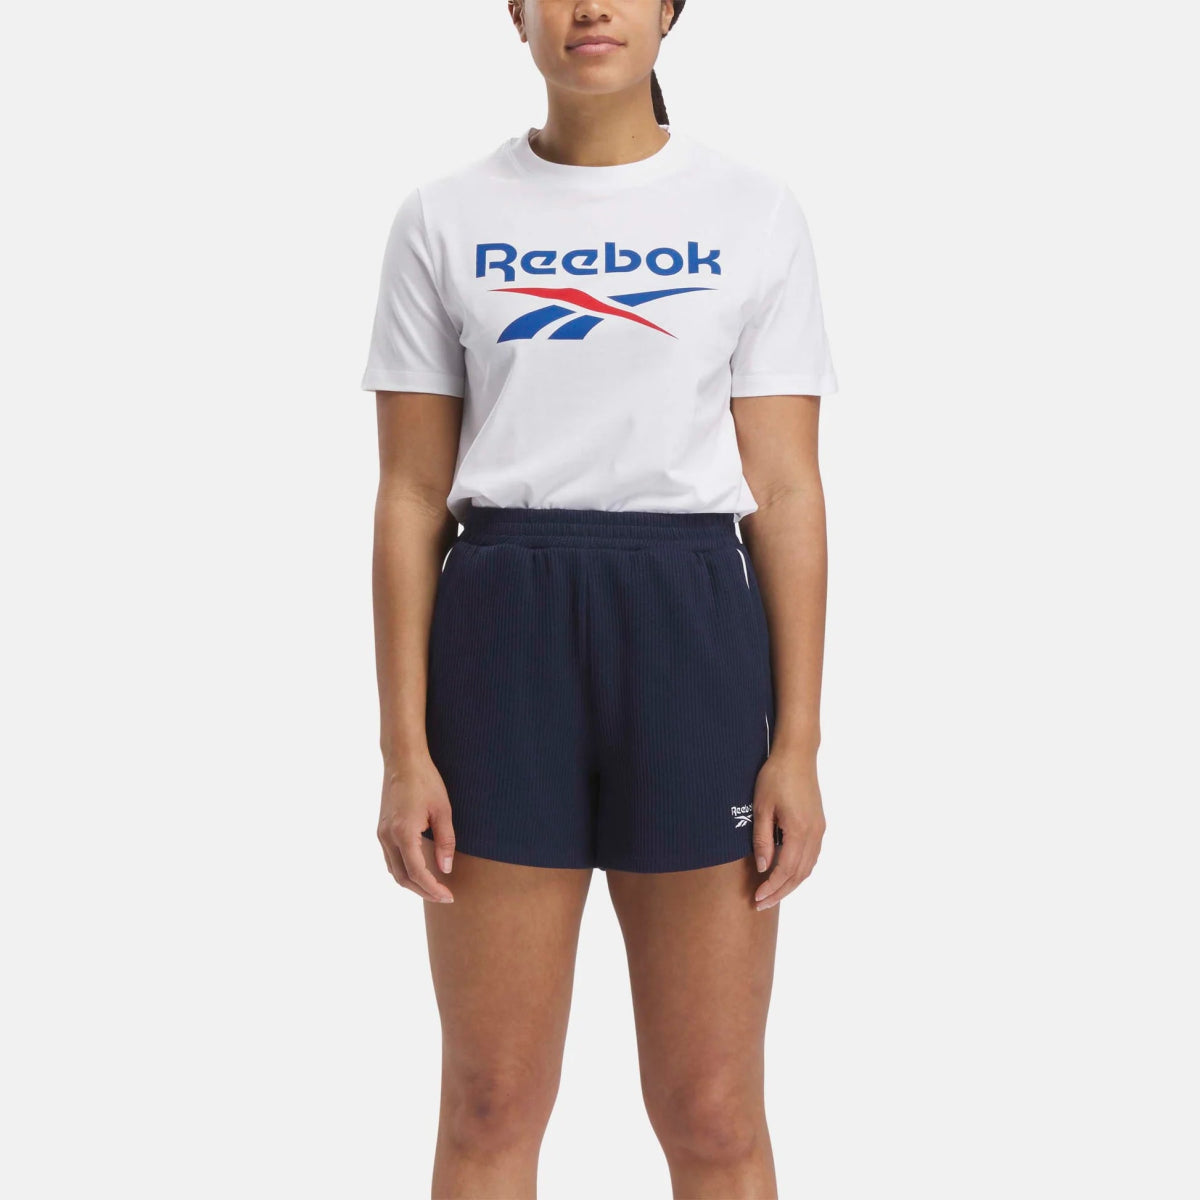 Reebok Reebok WOMEN'S Identity Big Logo WHITE TEE - INSPORT